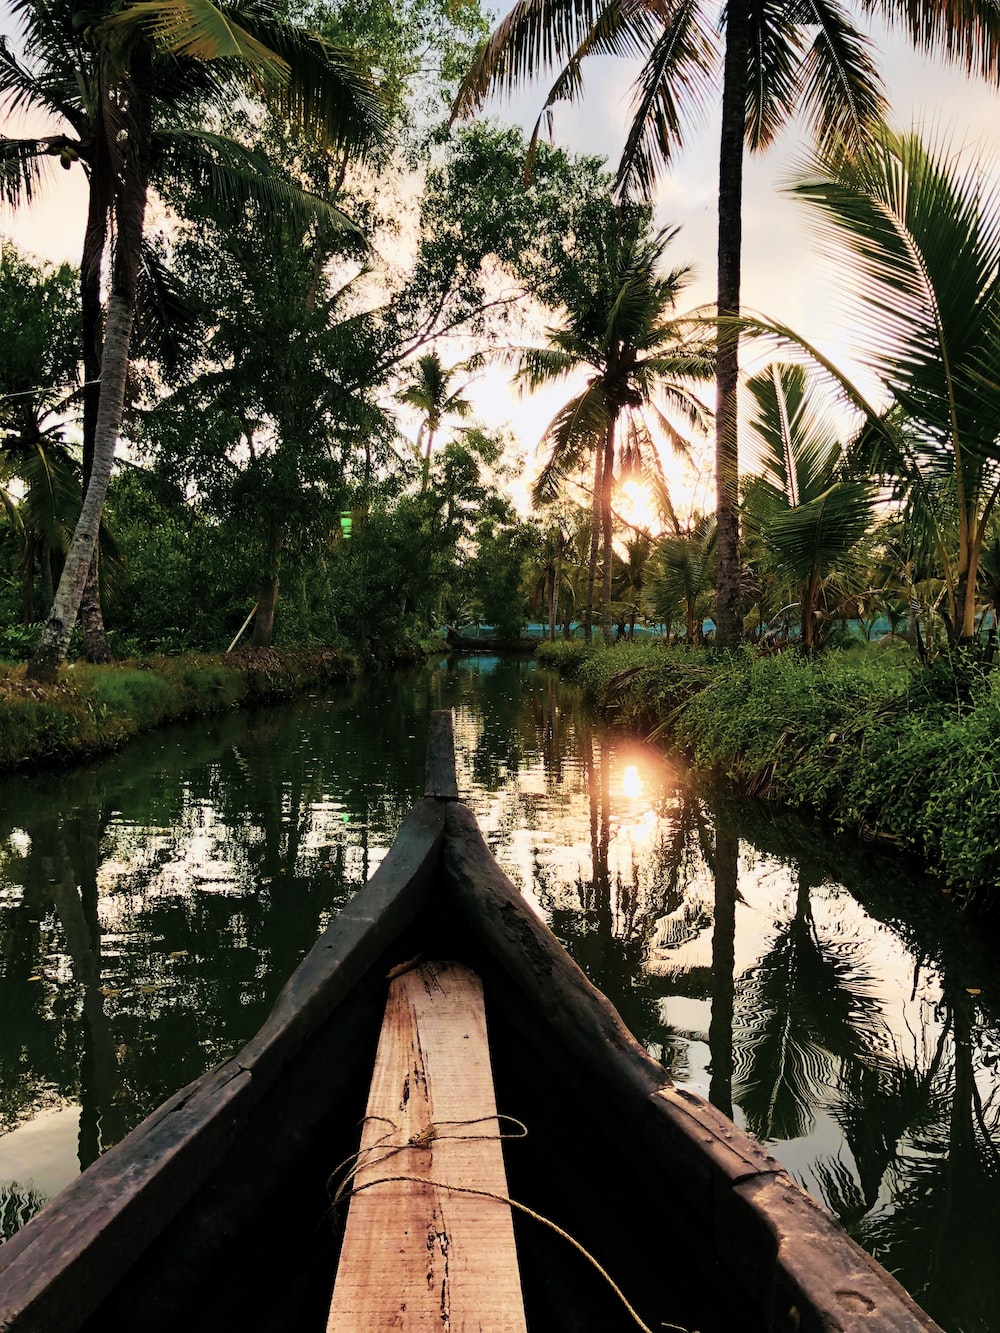 Kerala Nature Picture. Download